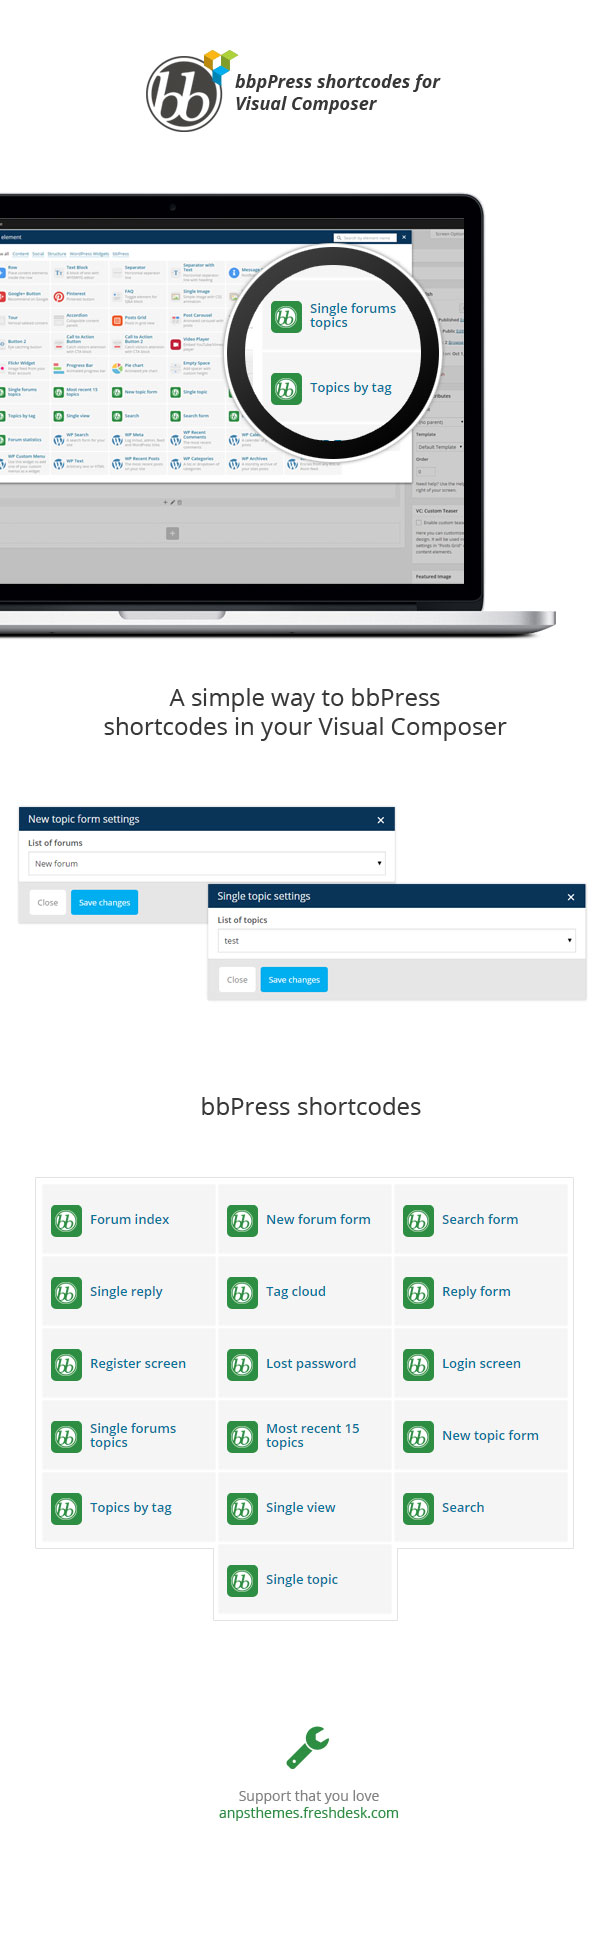 bbPress shortcodes for Visual Composer - 2